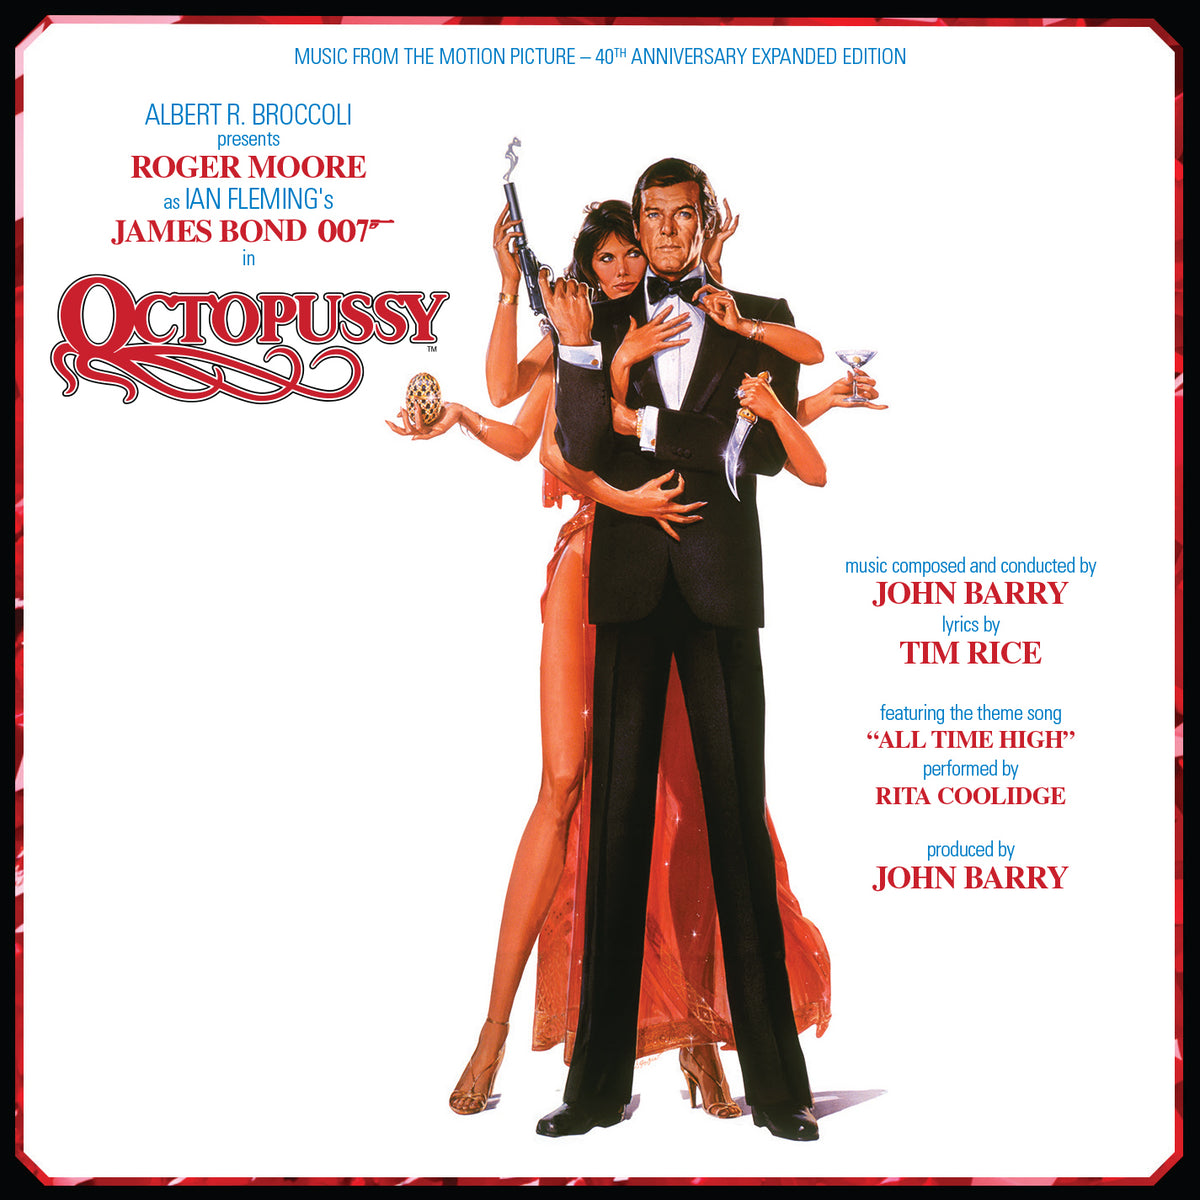 James Bond Octopussy Soundtrack-Doppel-CD-Set – Erweiterte Remastered Edition zum 40. Jubiläum